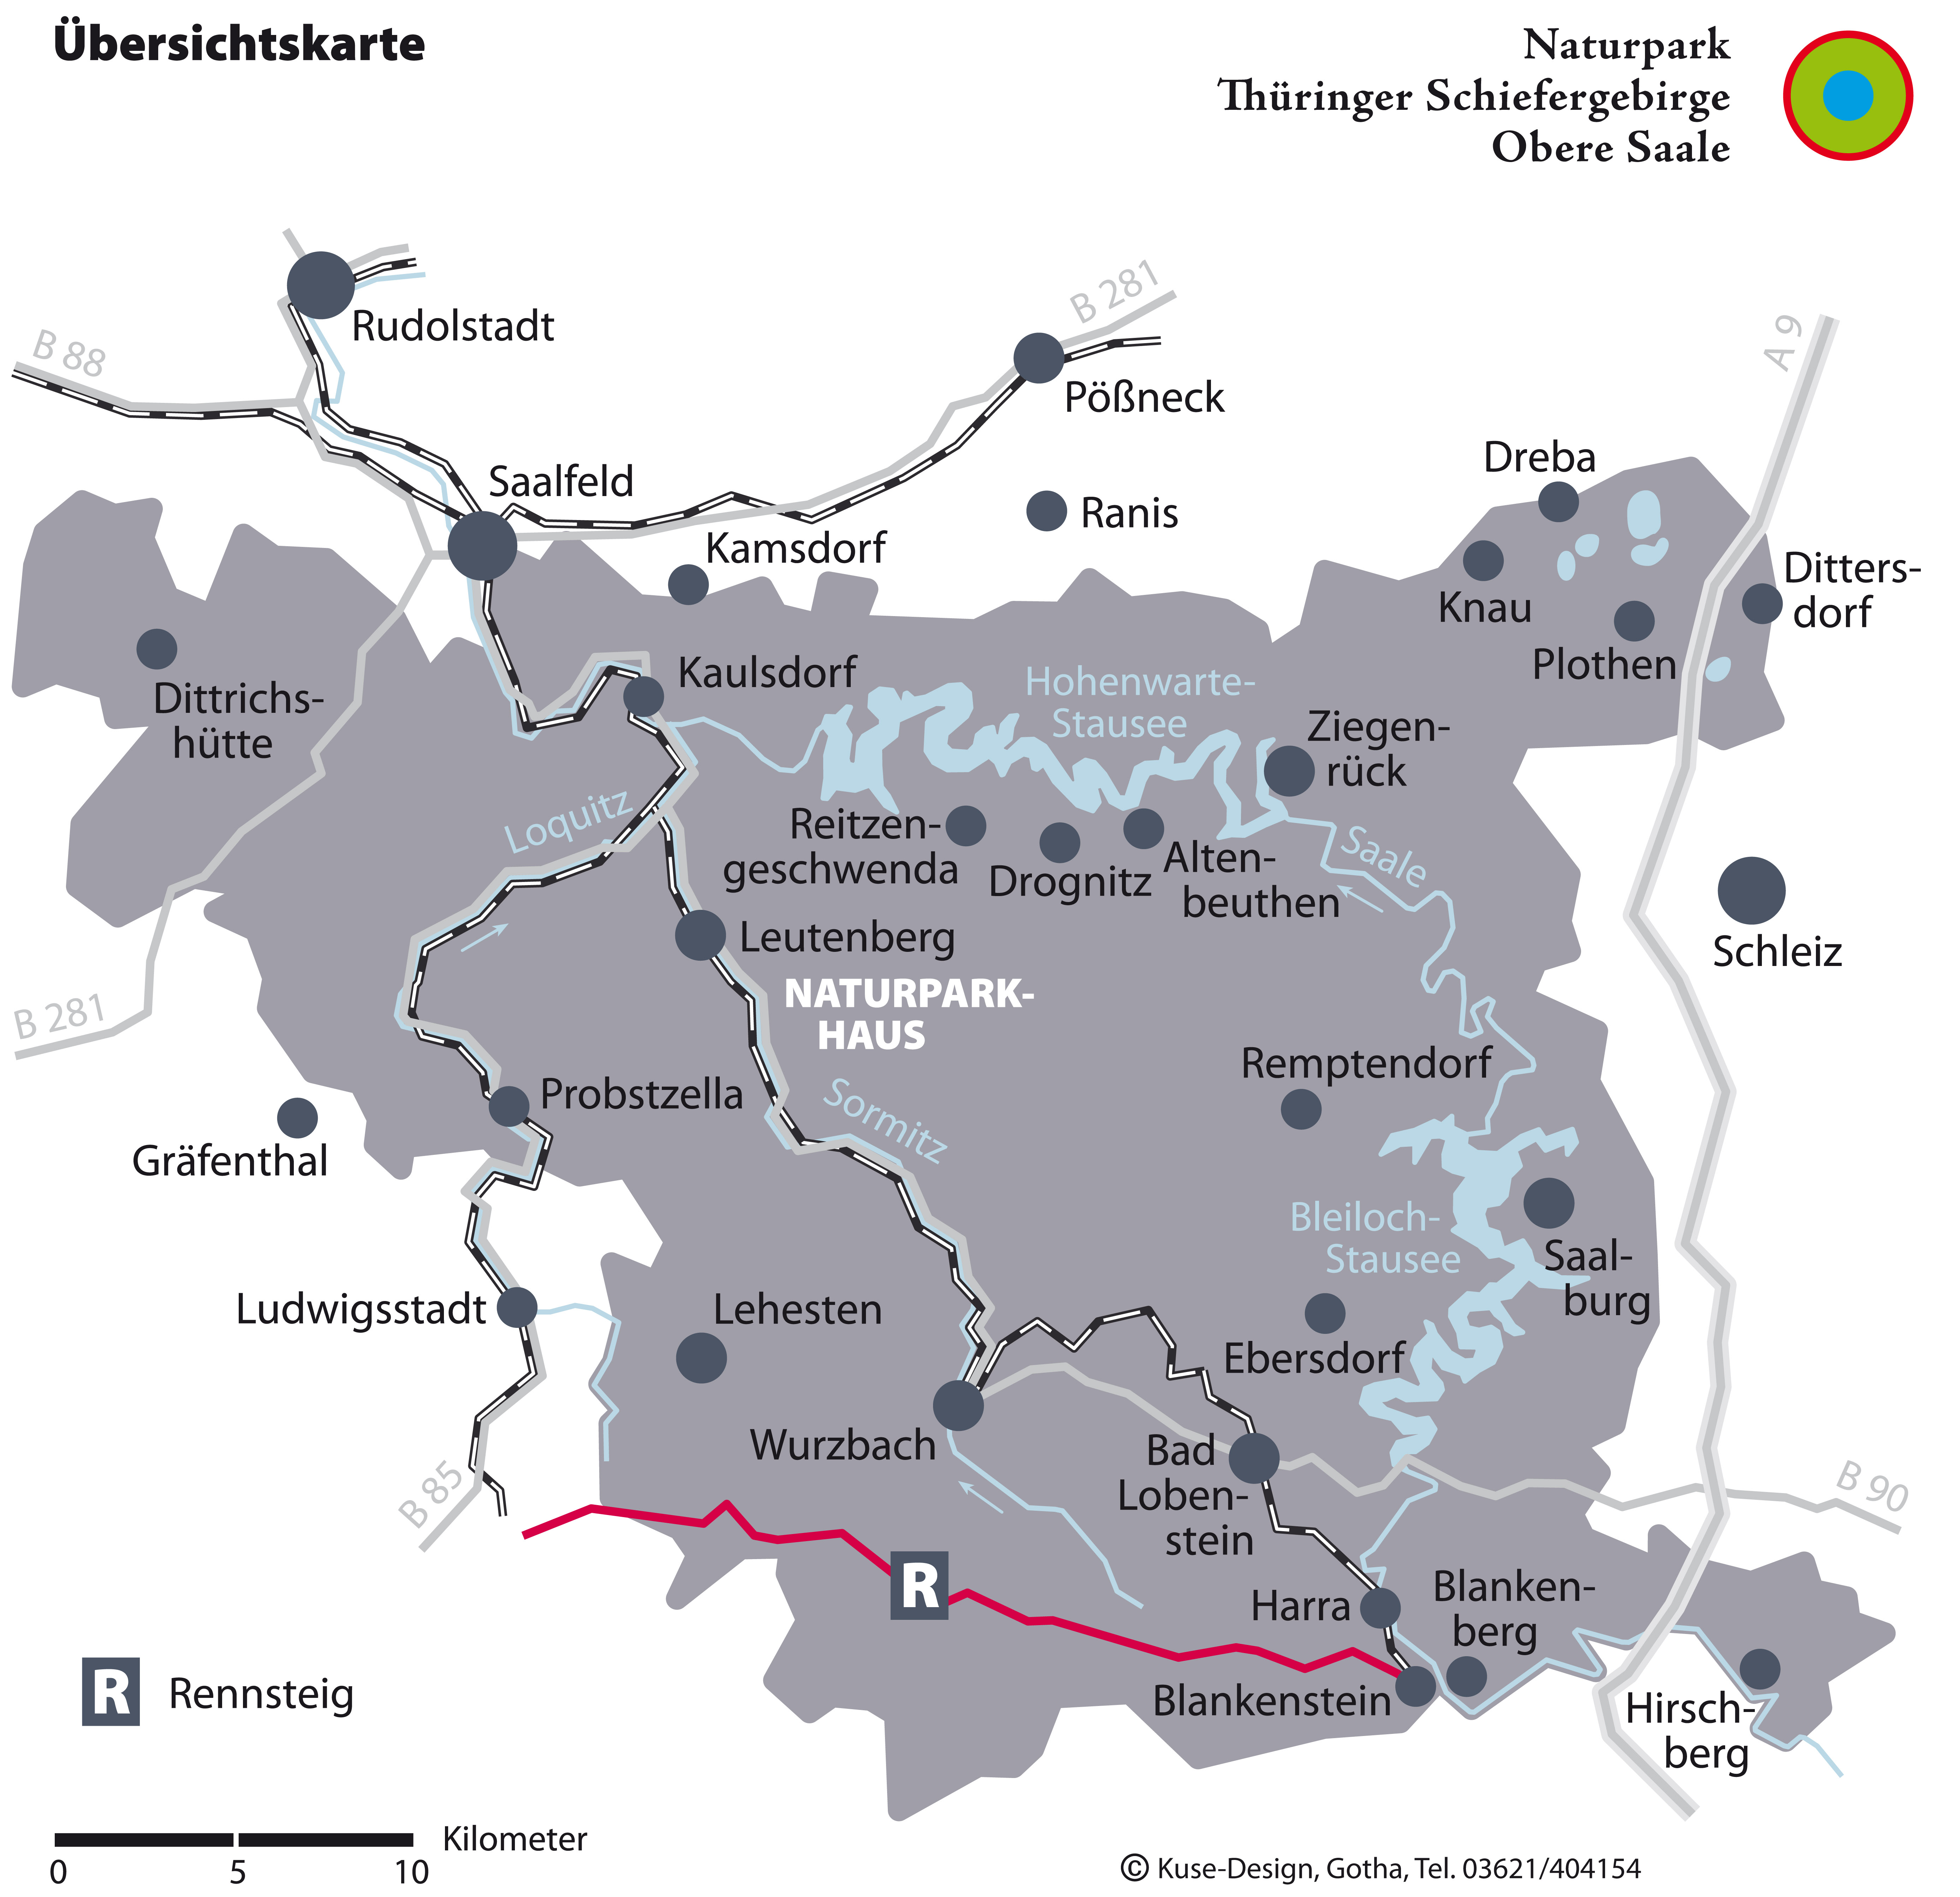 Naturpark Thüringer Schiefergebirge/ Obere Saale